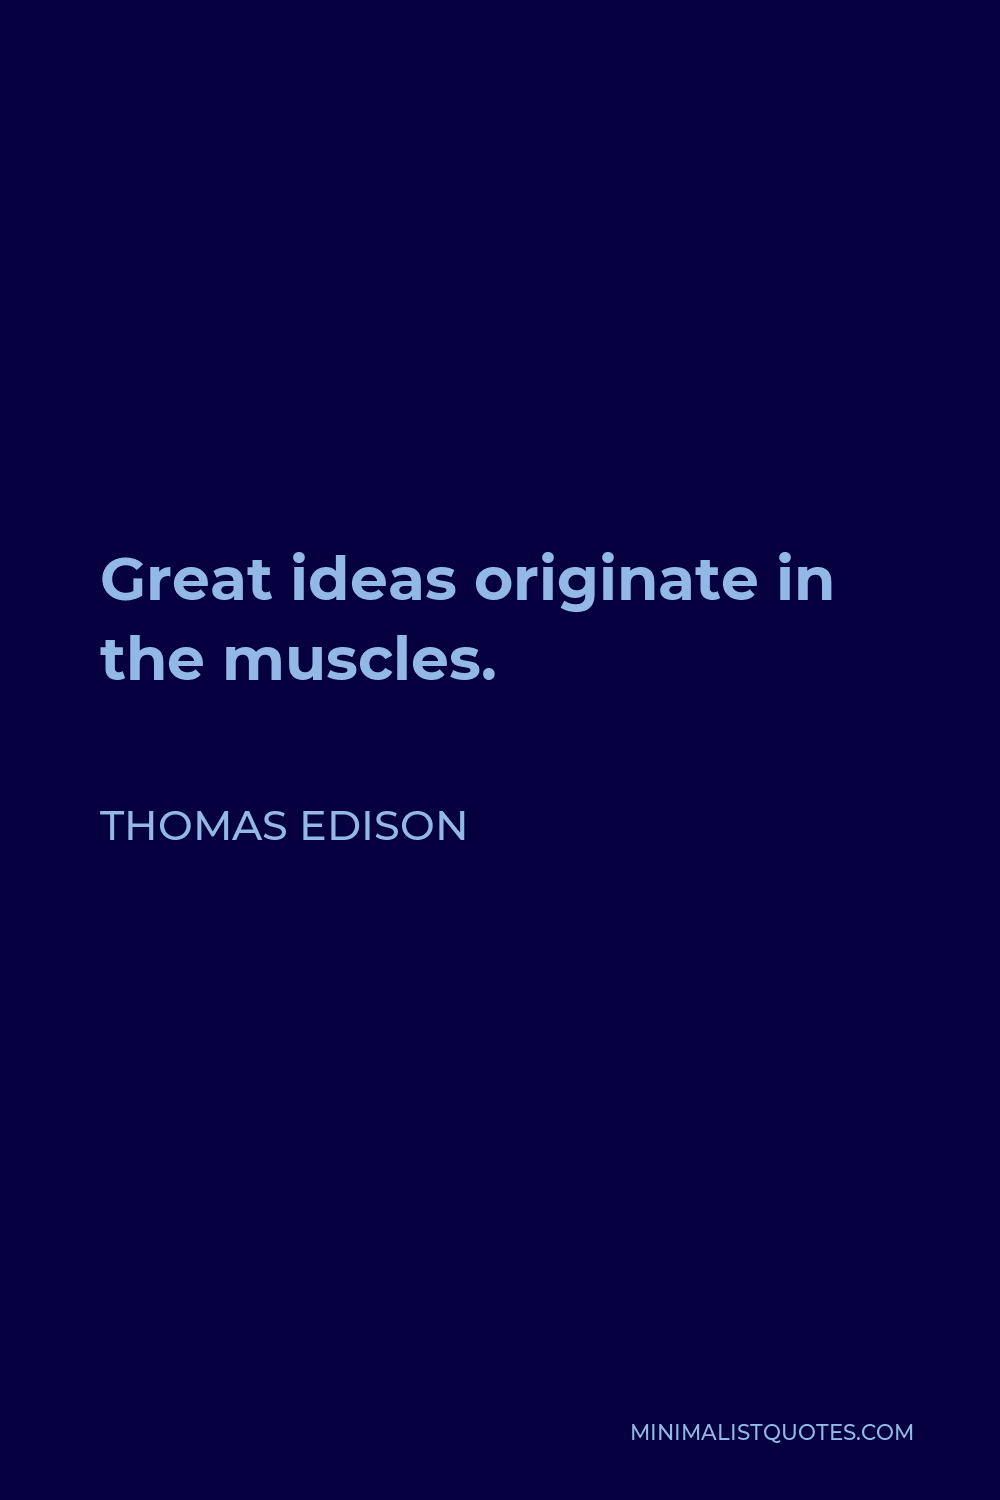 Thomas Edison Quote - Great ideas originate in the muscles.